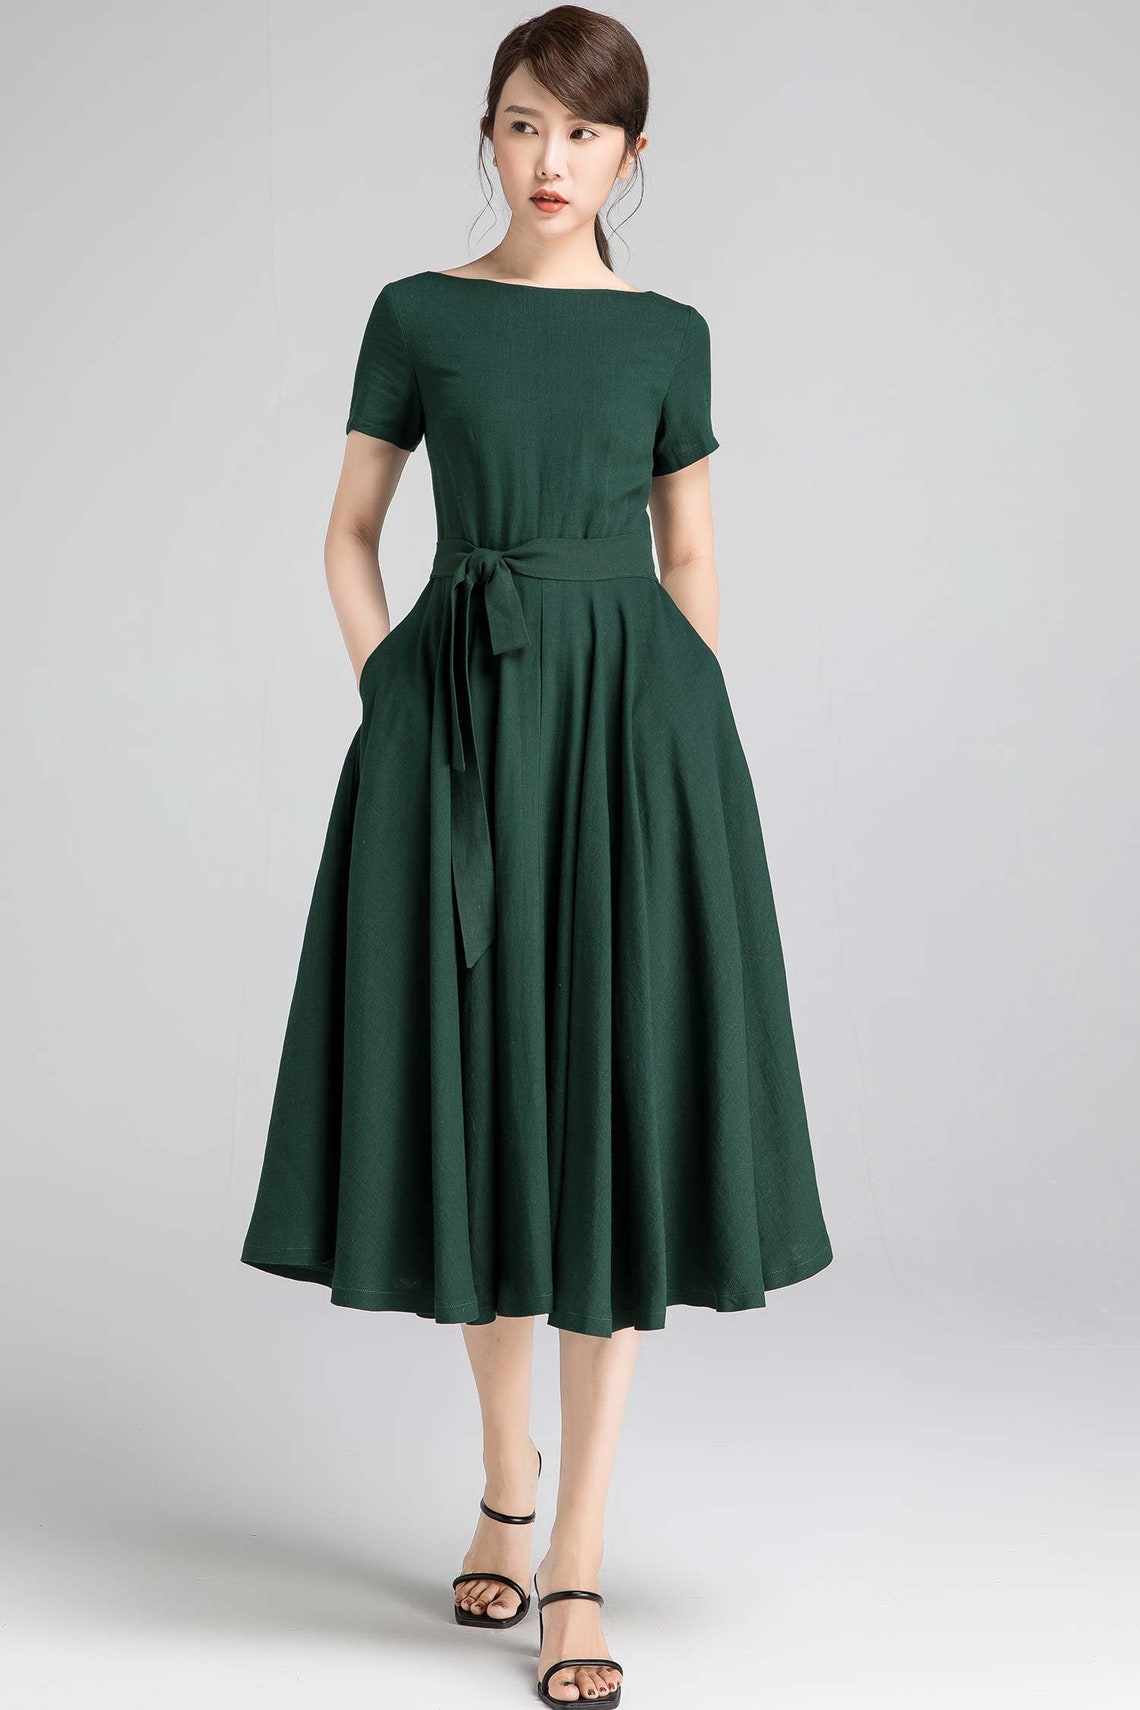 Short Sleeve Linen Dress Green Dress Fit and Flare Dress - Etsy